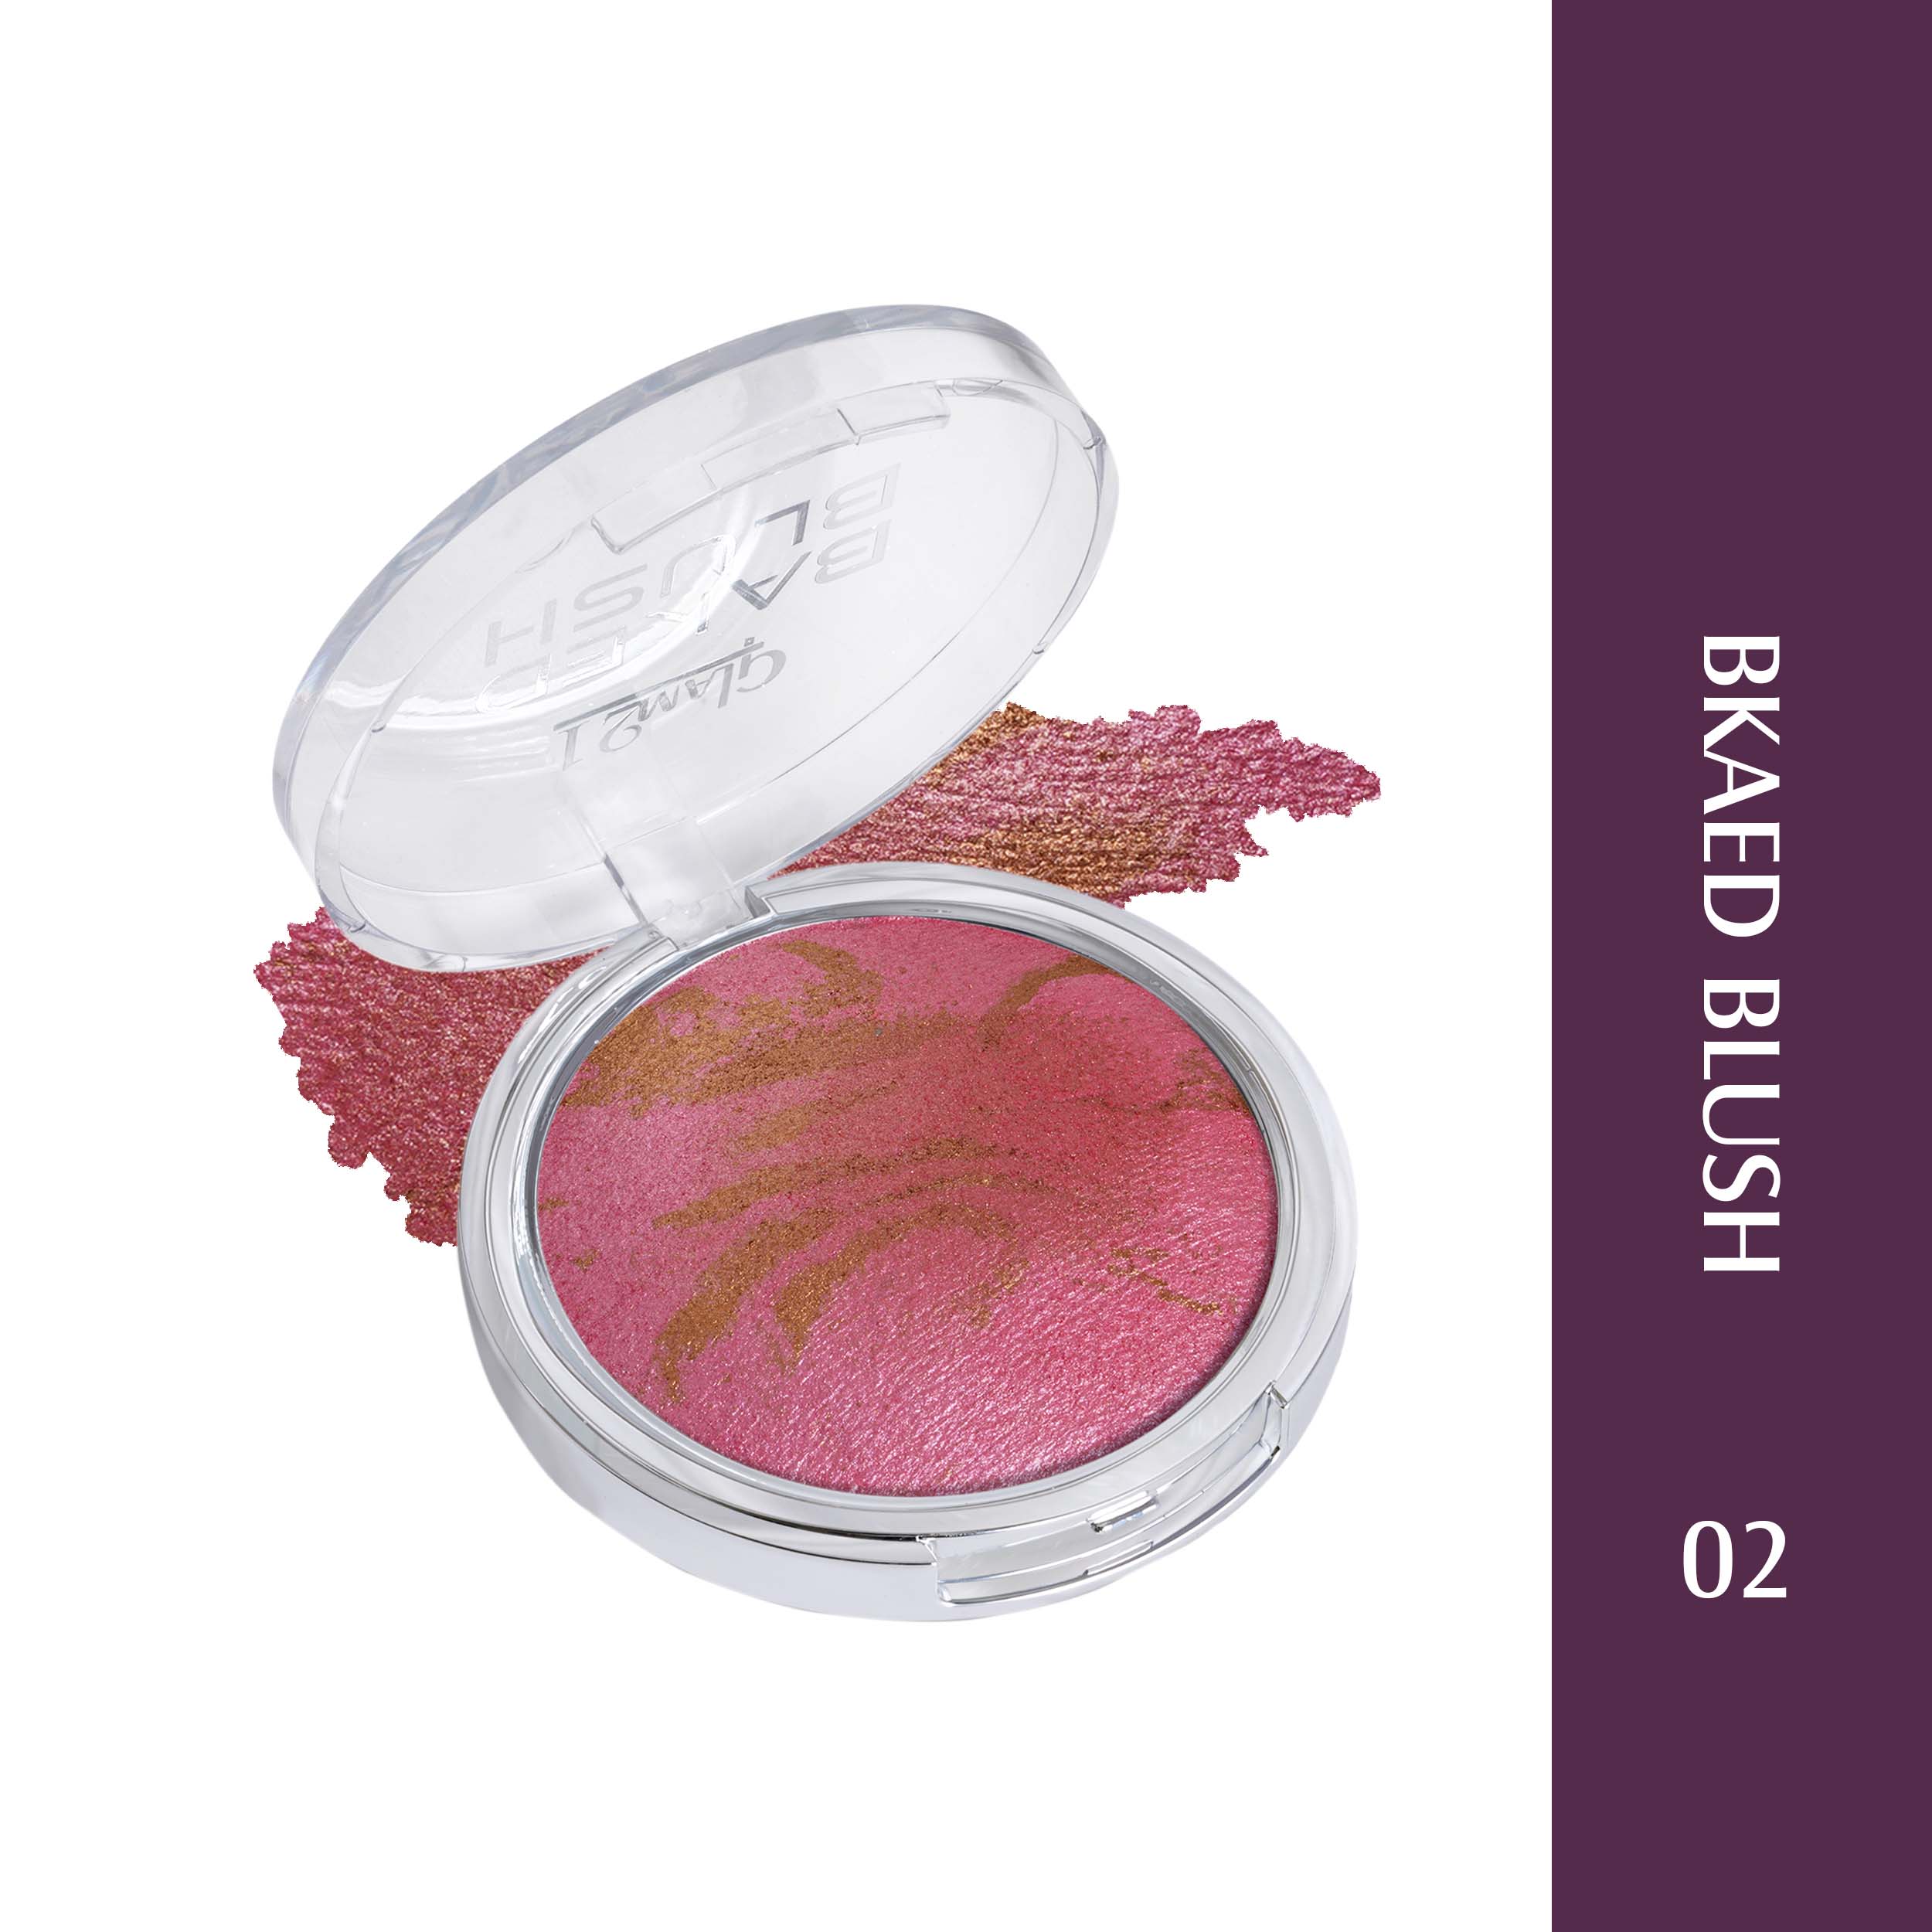 Glam21 Baked Blush Highly Pigmented Formula, Long-Lasting, Illuminating Texture, 6g (Shade-02)